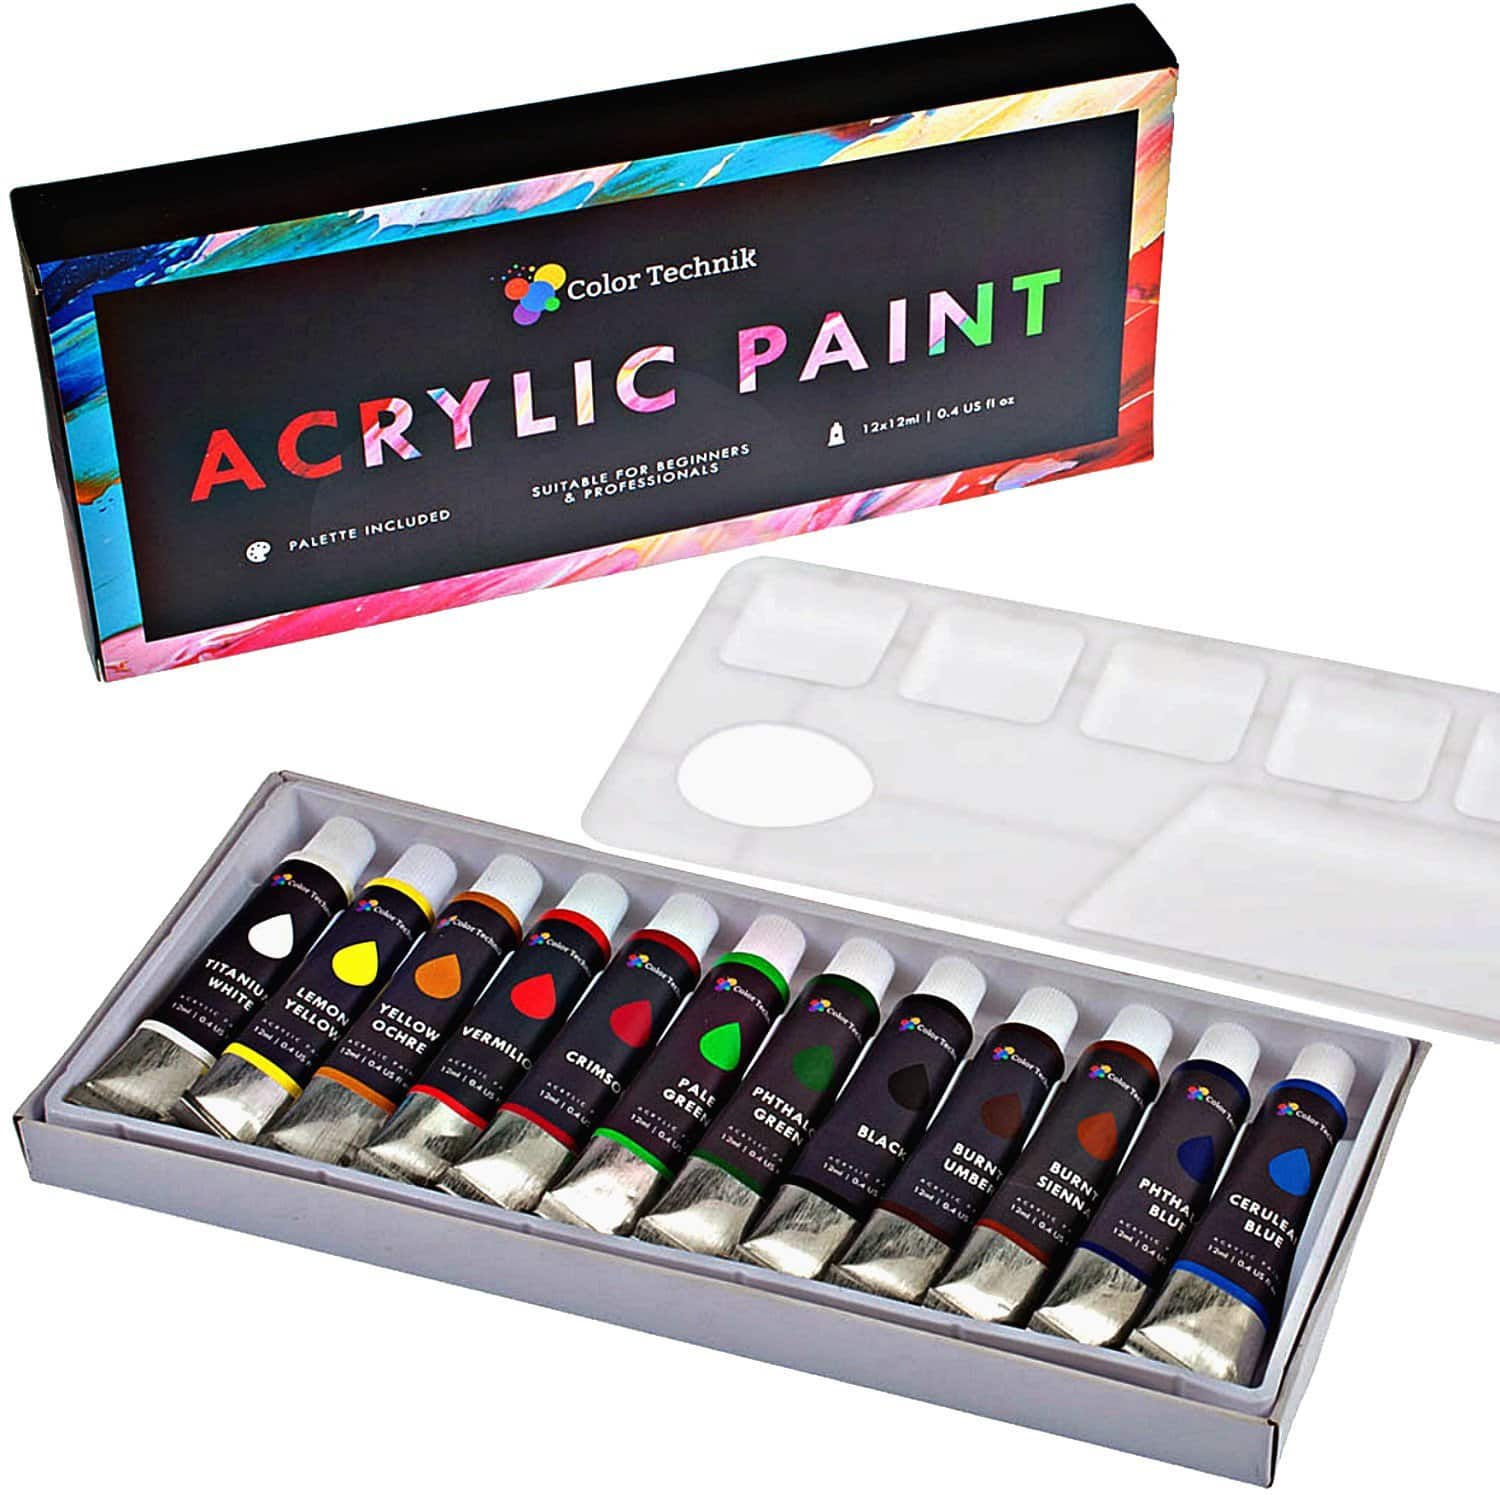 LIGHTNING DEAL ALERT! Acrylic Paint Set Palette Included 12 Tubes – 79% off